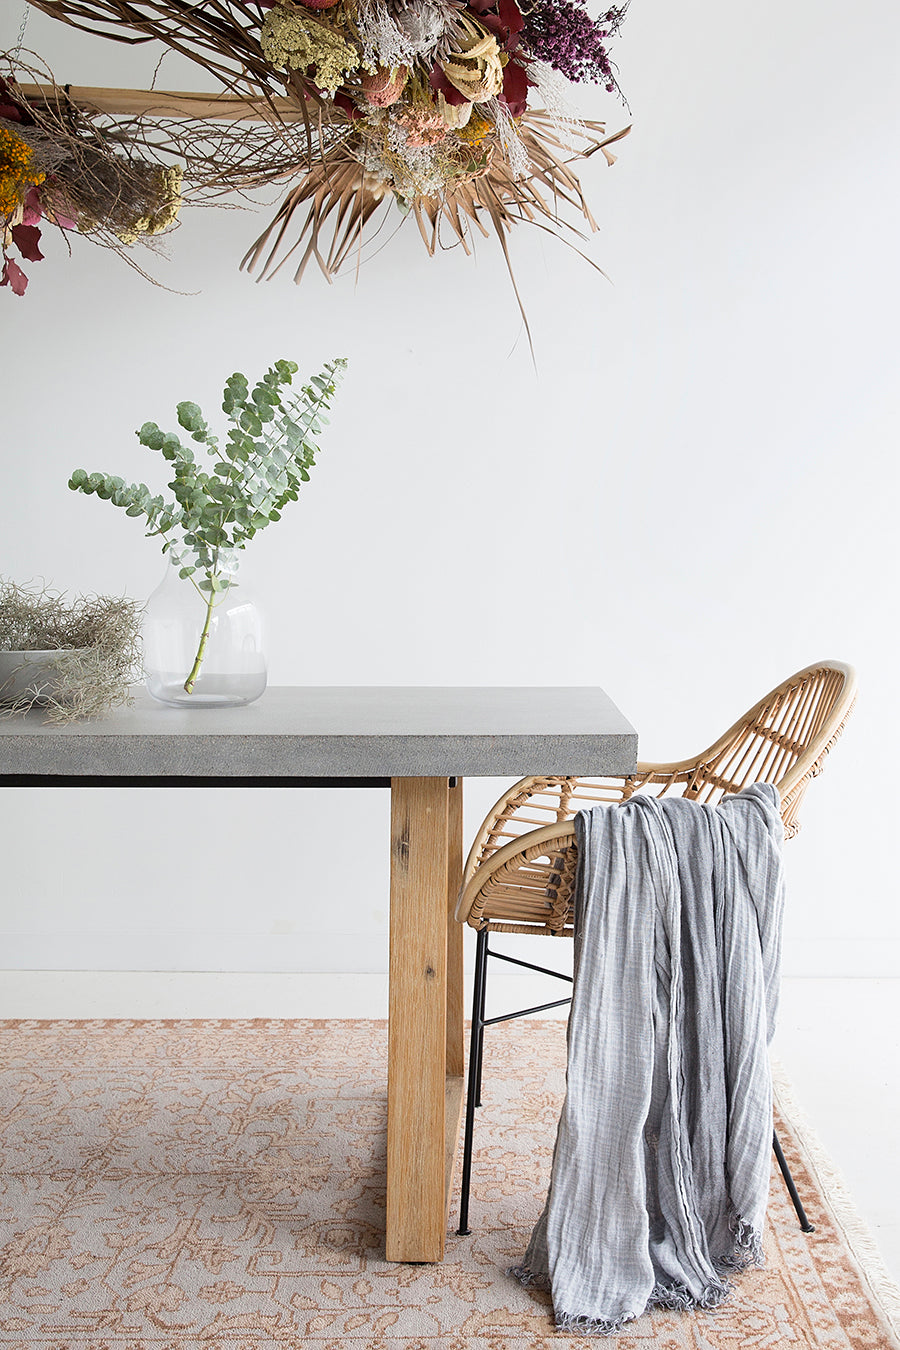 1.6m Alta Rectangular Dining Table - Speckled Grey with Light Honey Acacia Wood Legs - www.elkstone.com.au